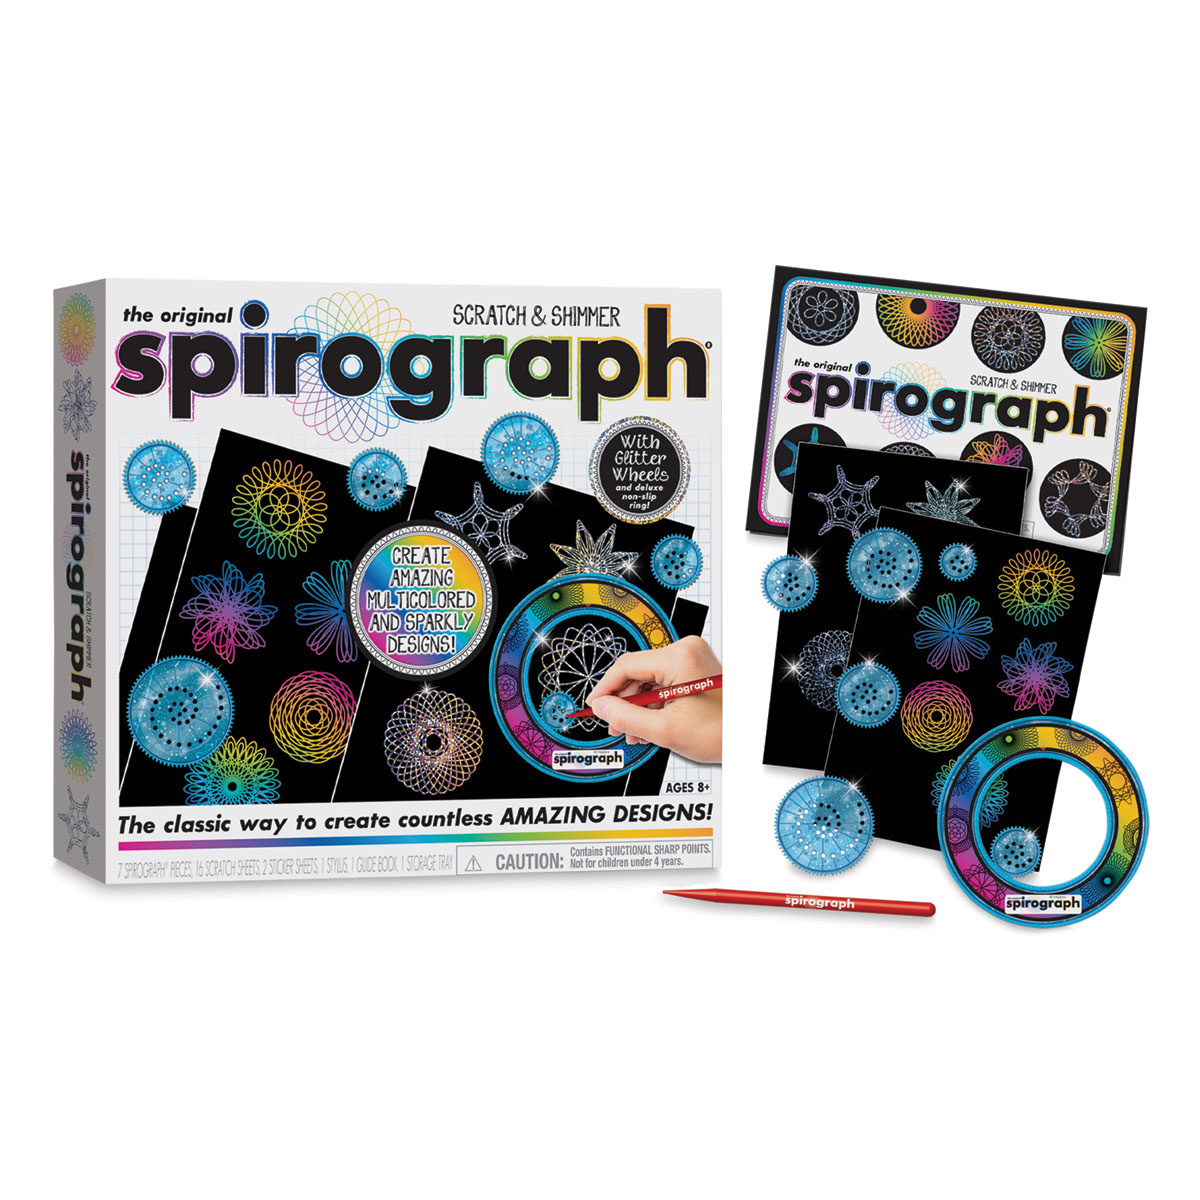 Spirograph Scratch & Shimmer-2